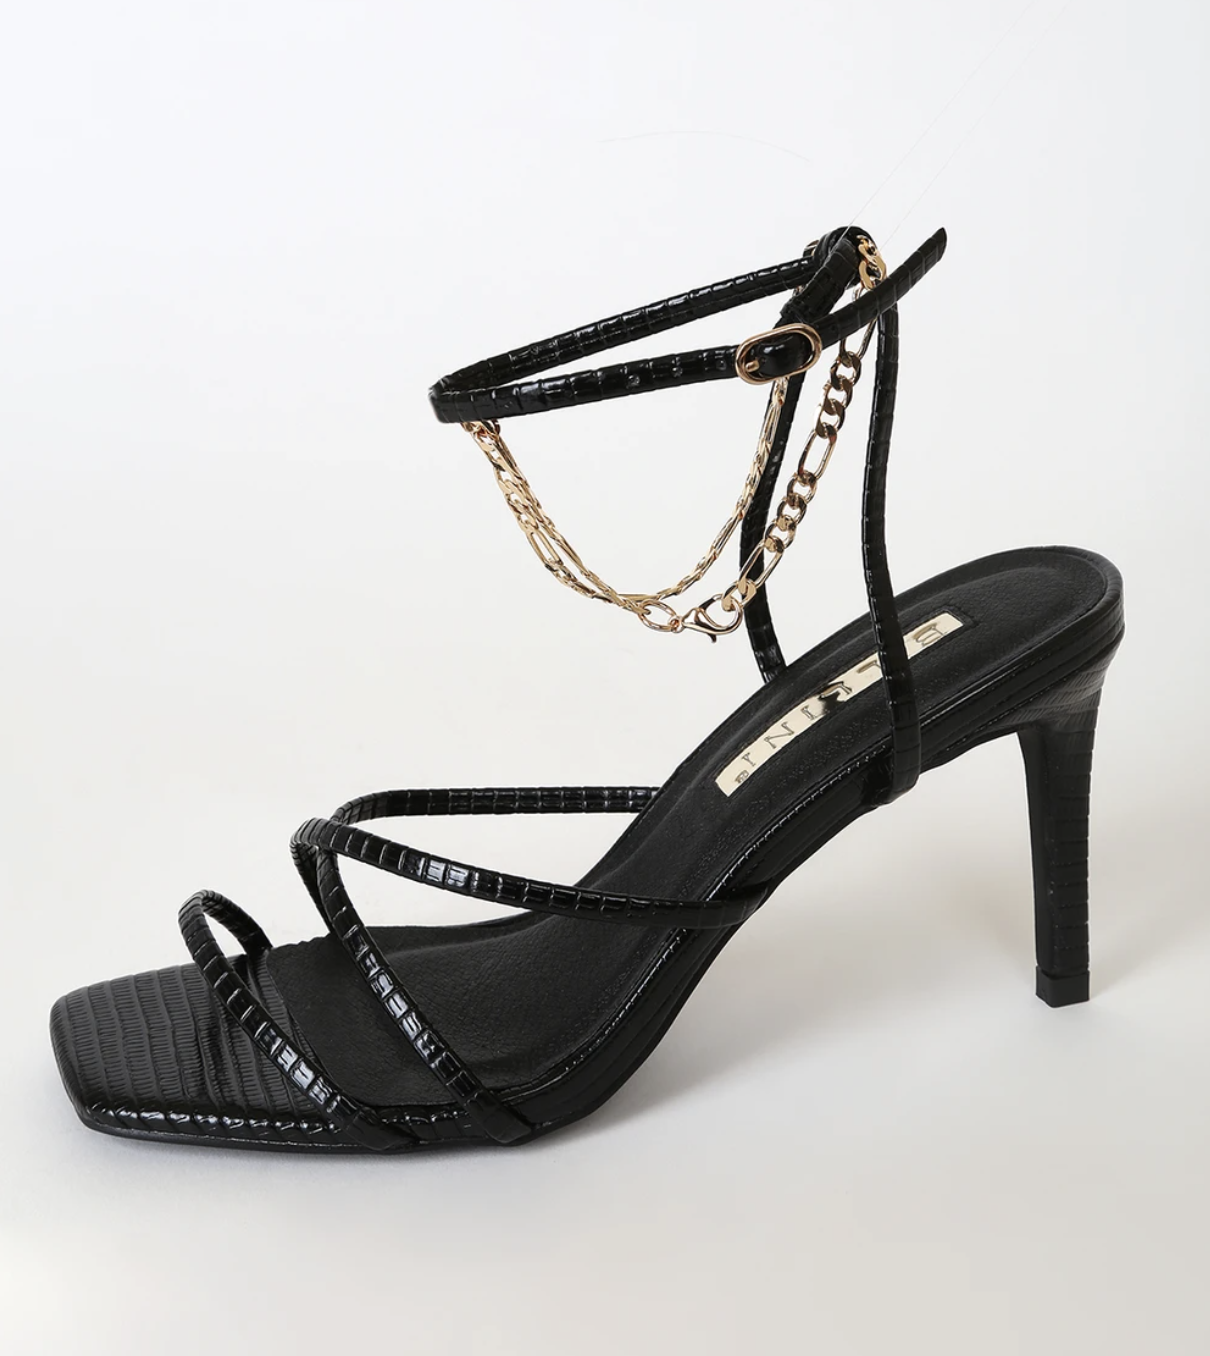 Blakely Black Lizard Strappy High Heel Sandals